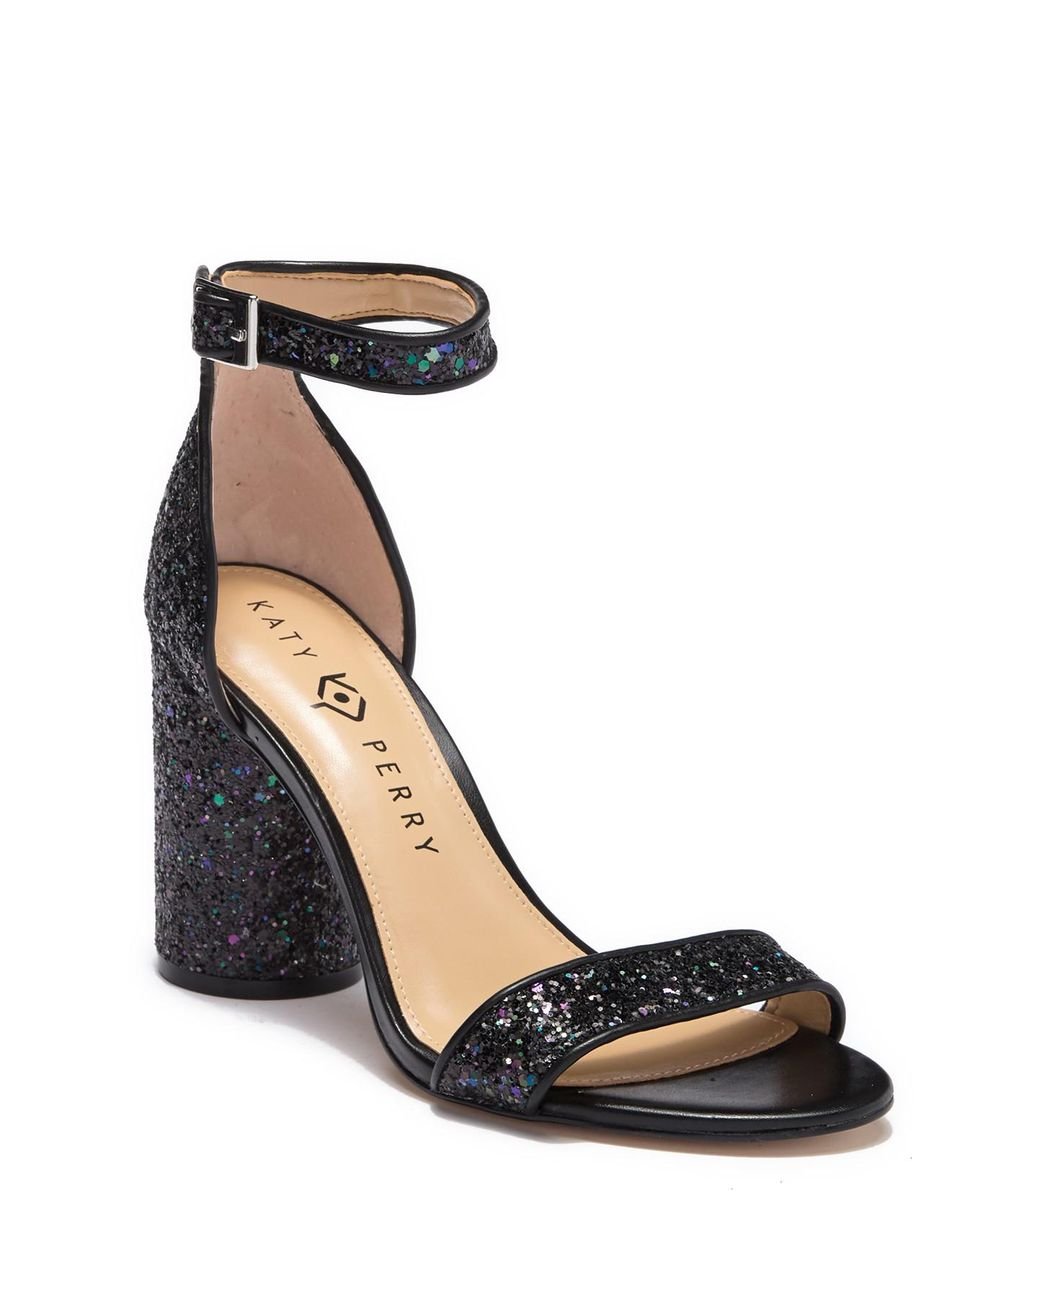 Black Glitter Block Heel Sandals from Quiz on 21 Buttons